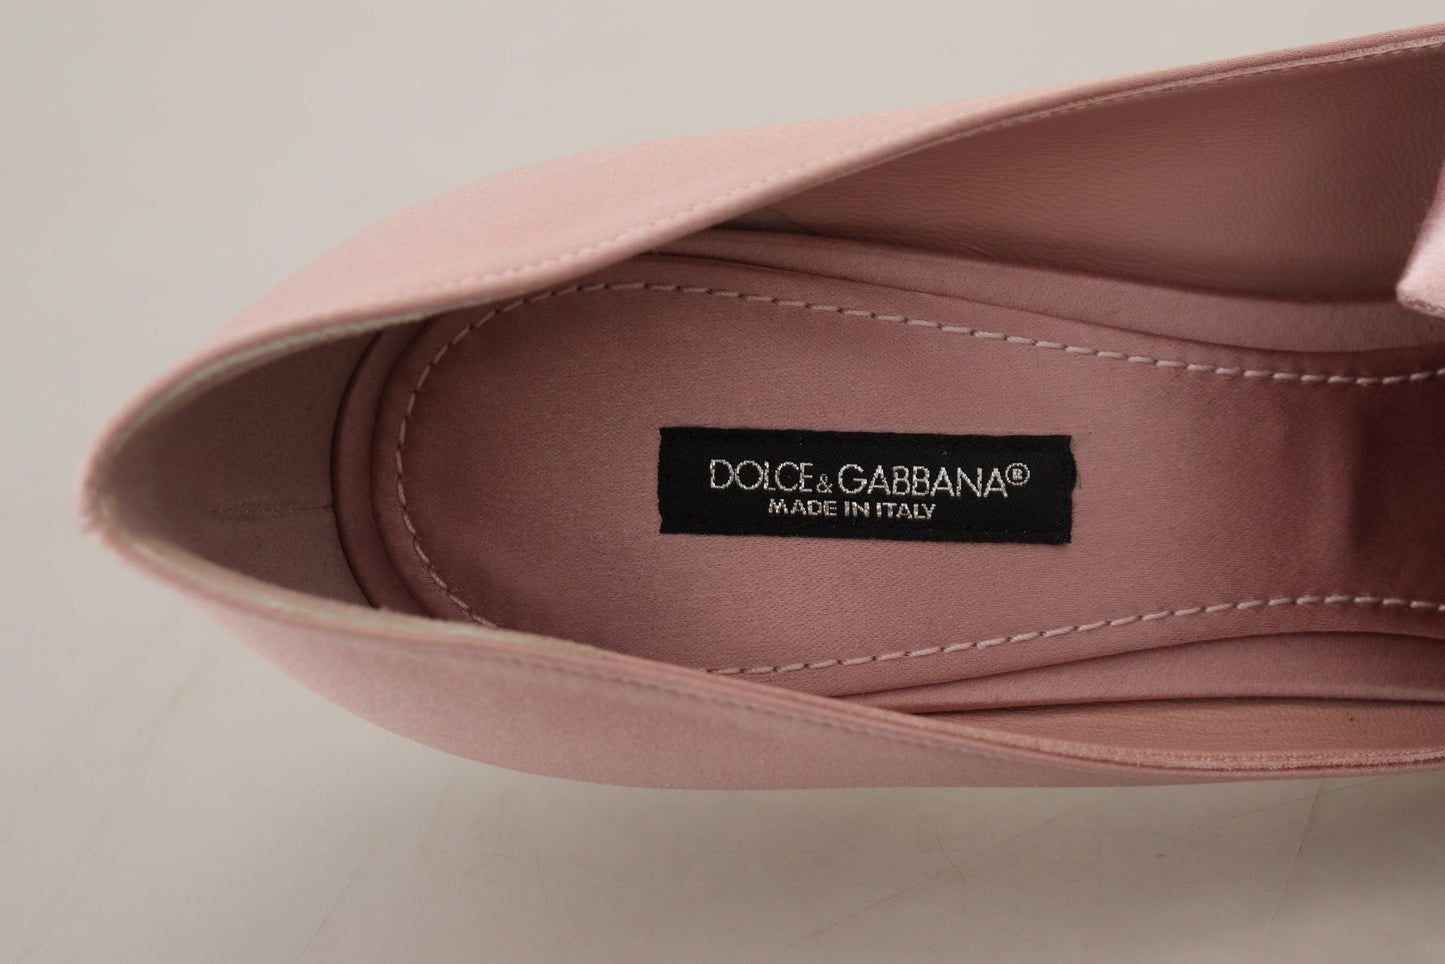 Fashionsarah.com Fashionsarah.com Dolce & Gabbana Pink Silk Clear Crystal Pumps Classic Shoes